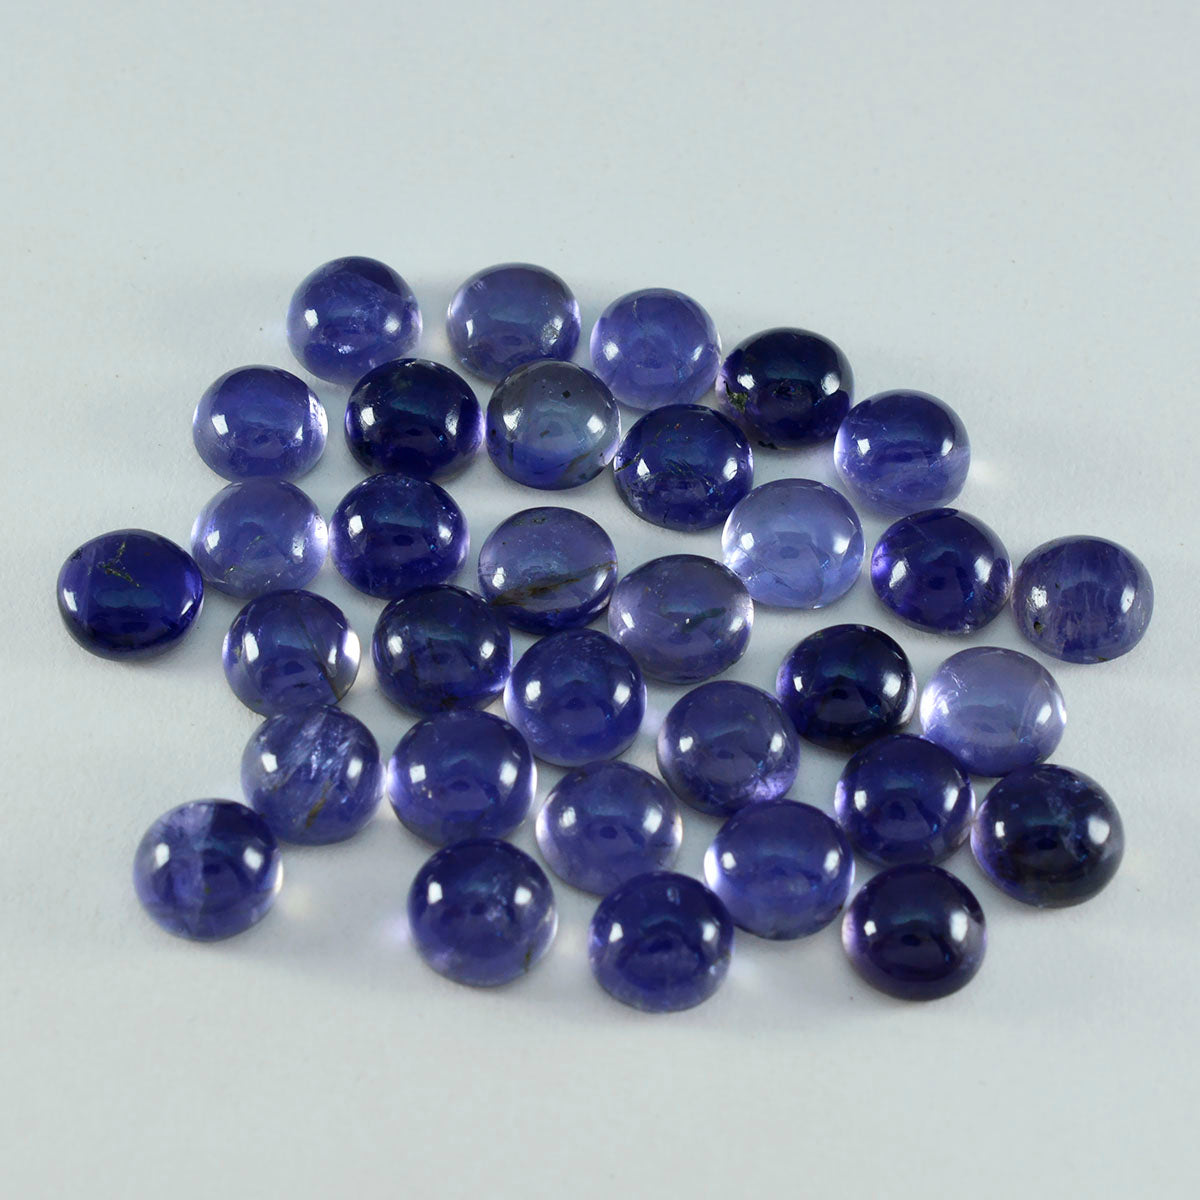 Riyogems 1PC blauwe ioliet cabochon 7x7 mm ronde vorm A+ kwaliteit losse edelsteen